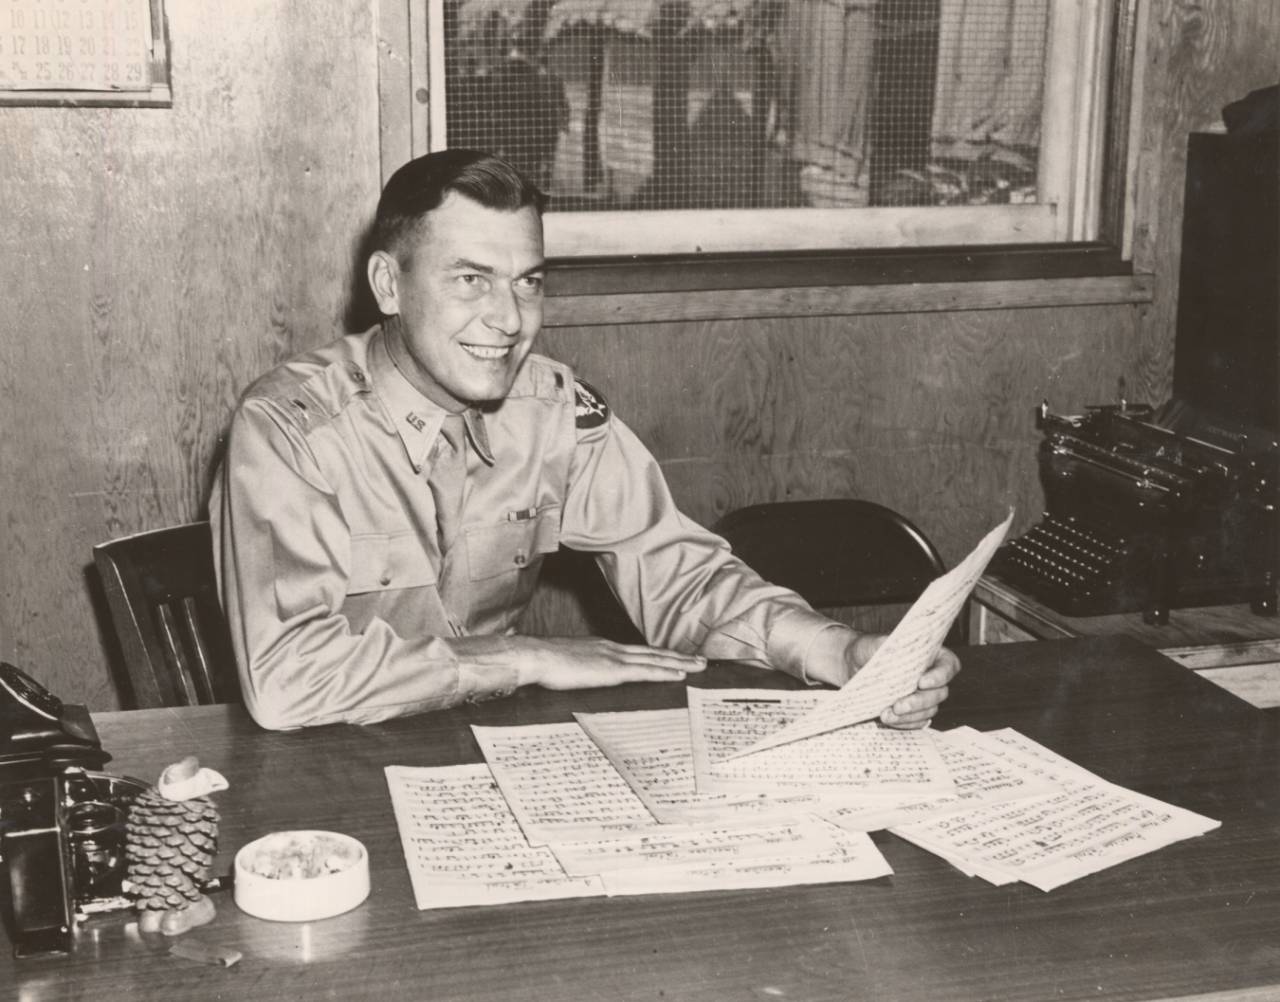 Lt. Heiberg at his desk